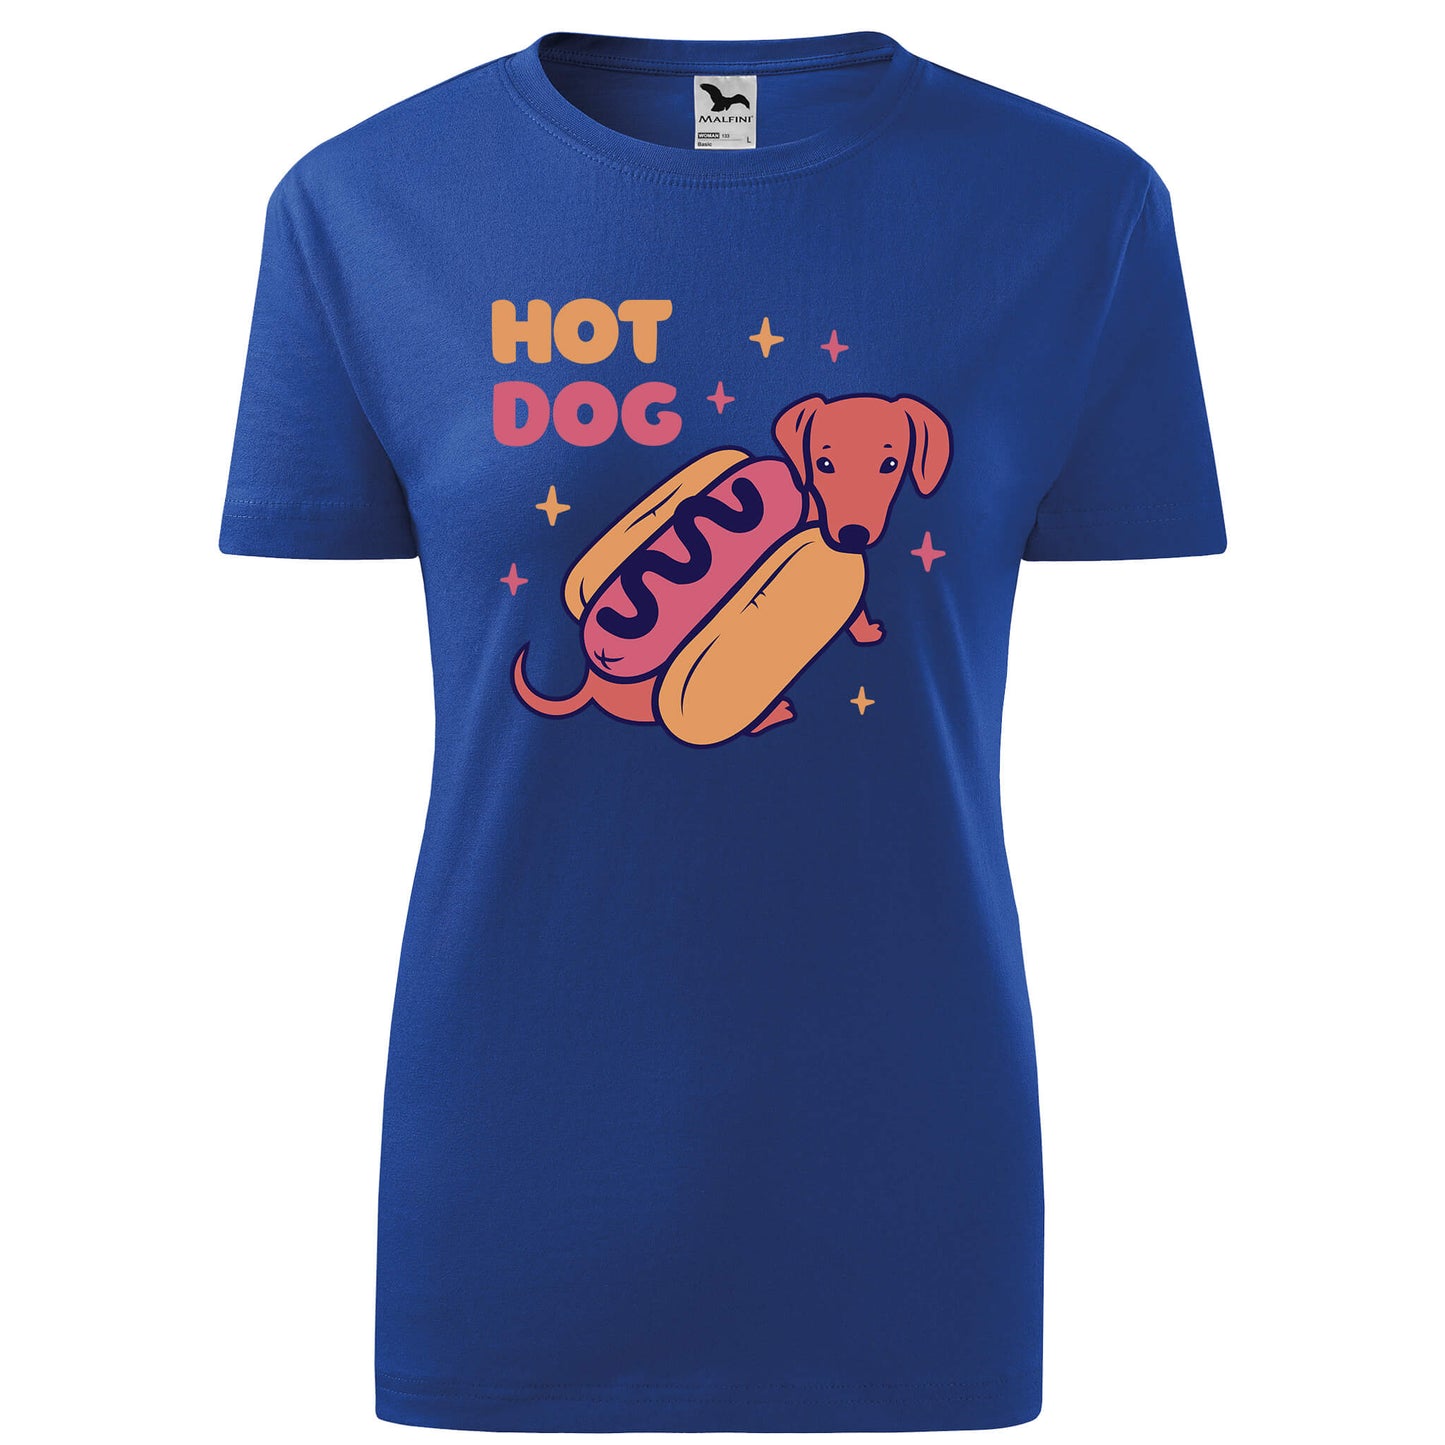 Hot dog t-shirt - rvdesignprint